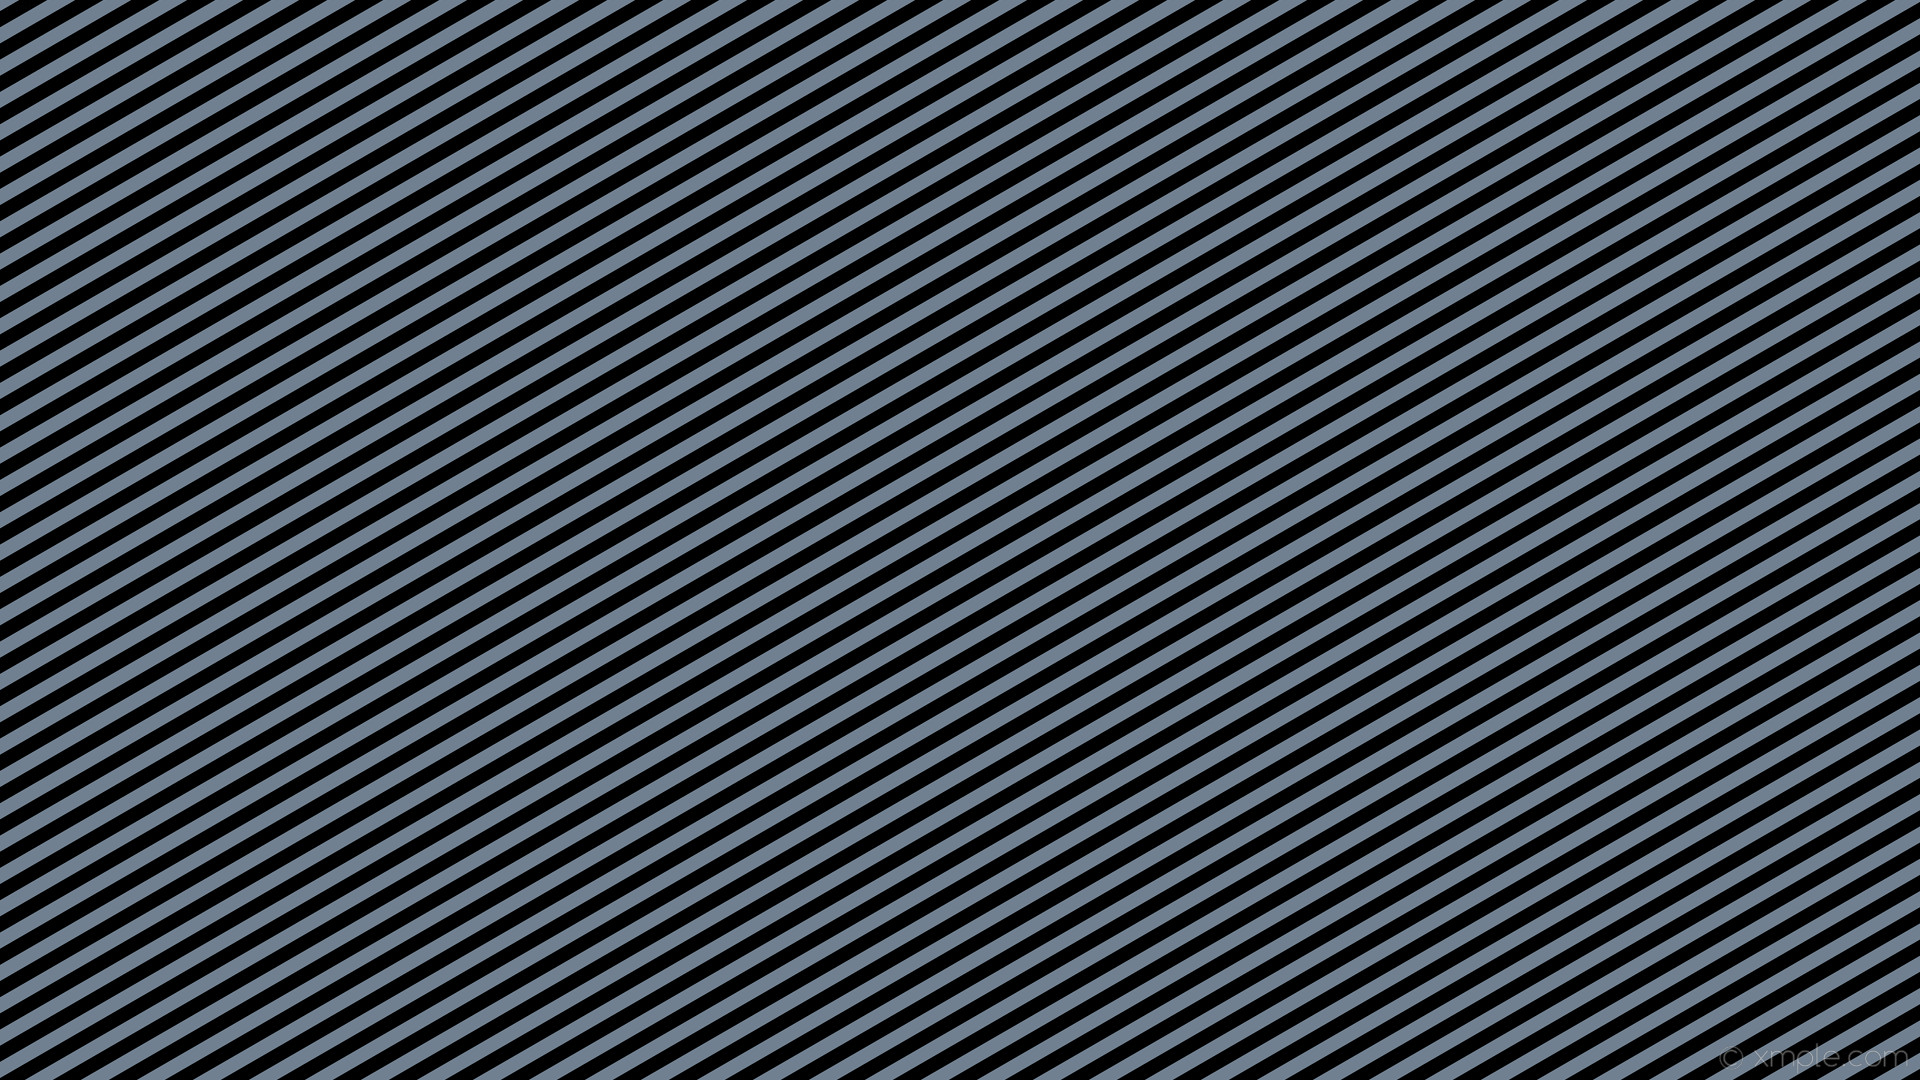 1920x1080 wallpaper streaks grey stripes lines black slate gray #708090 #000000  diagonal 30Â° 14px